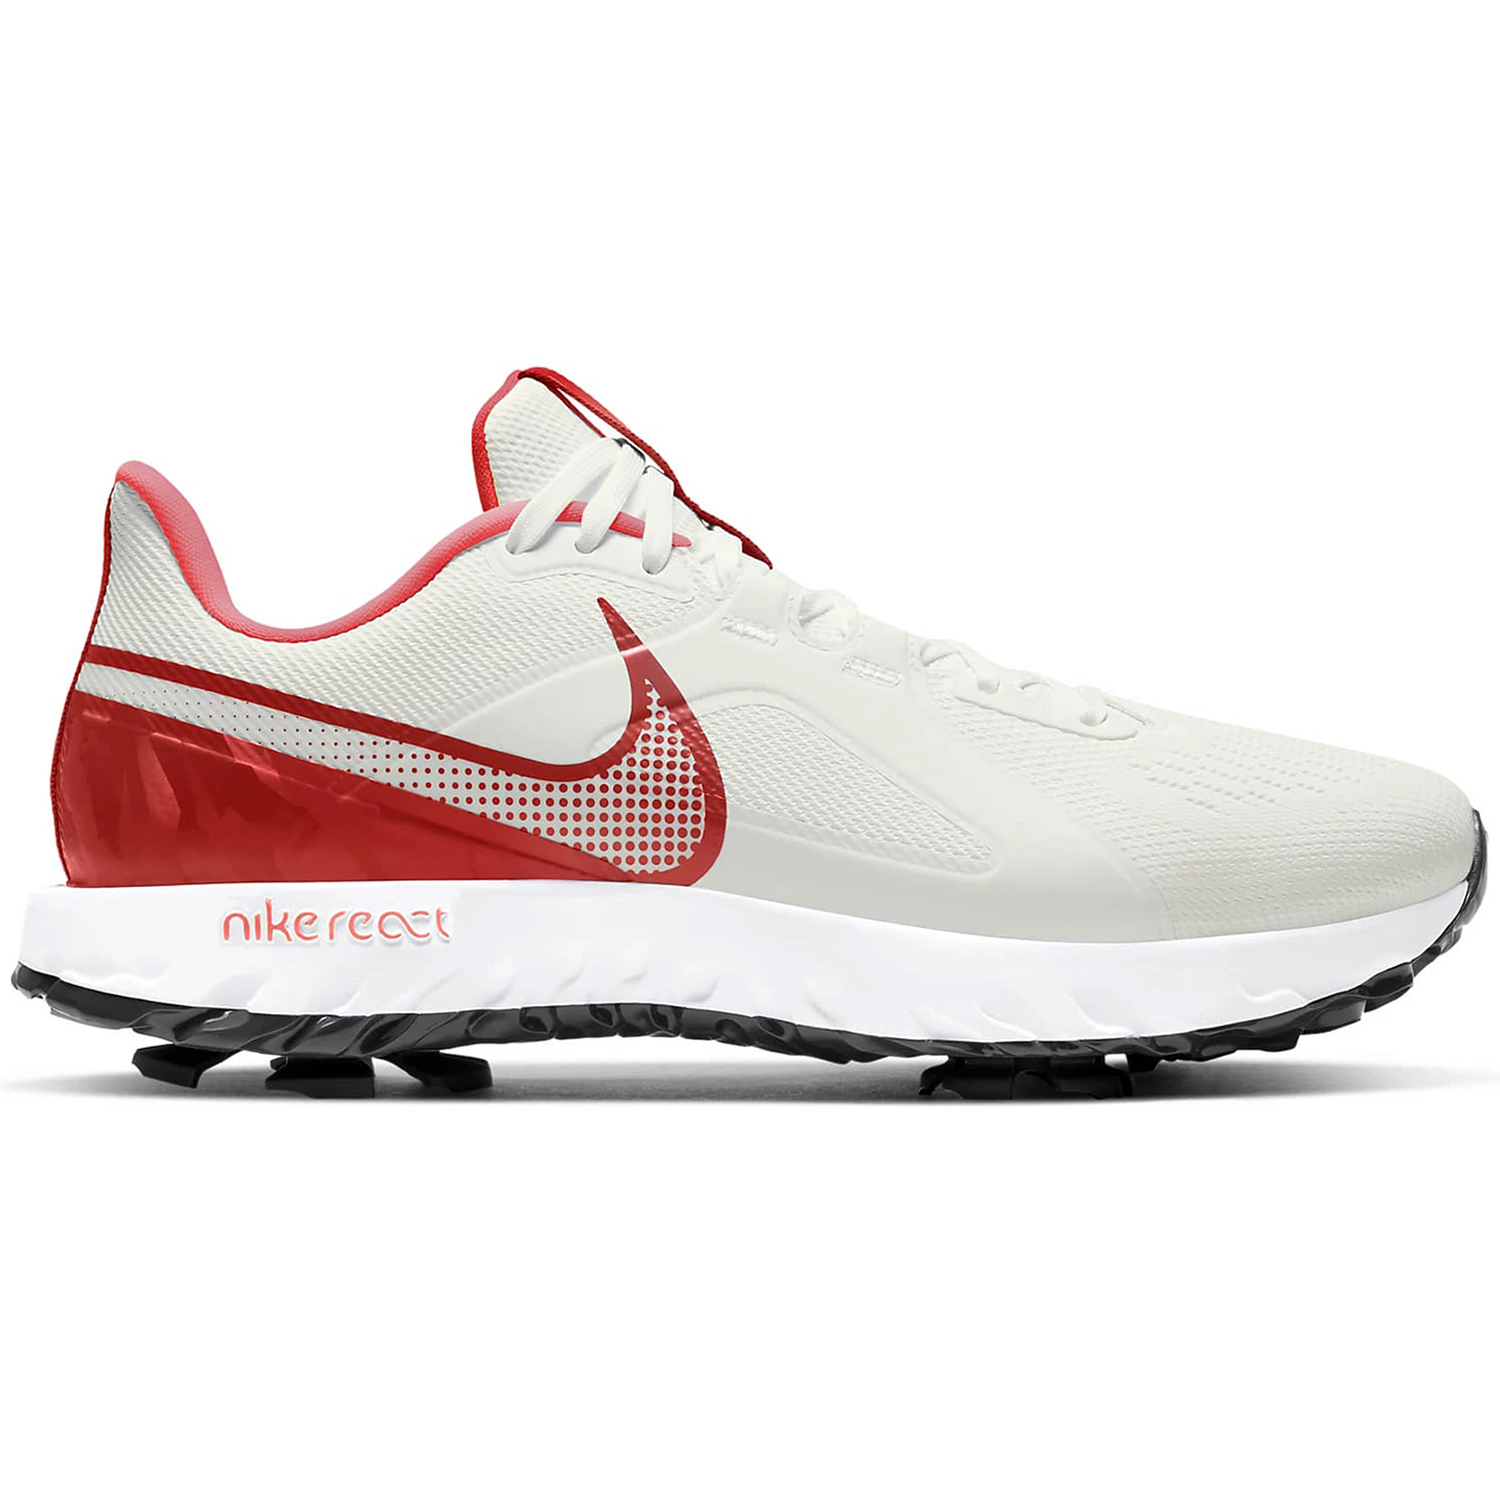 Nike React Infinity Pro Golf Shoes Sail/Magic Ember/White | Scottsdale Golf